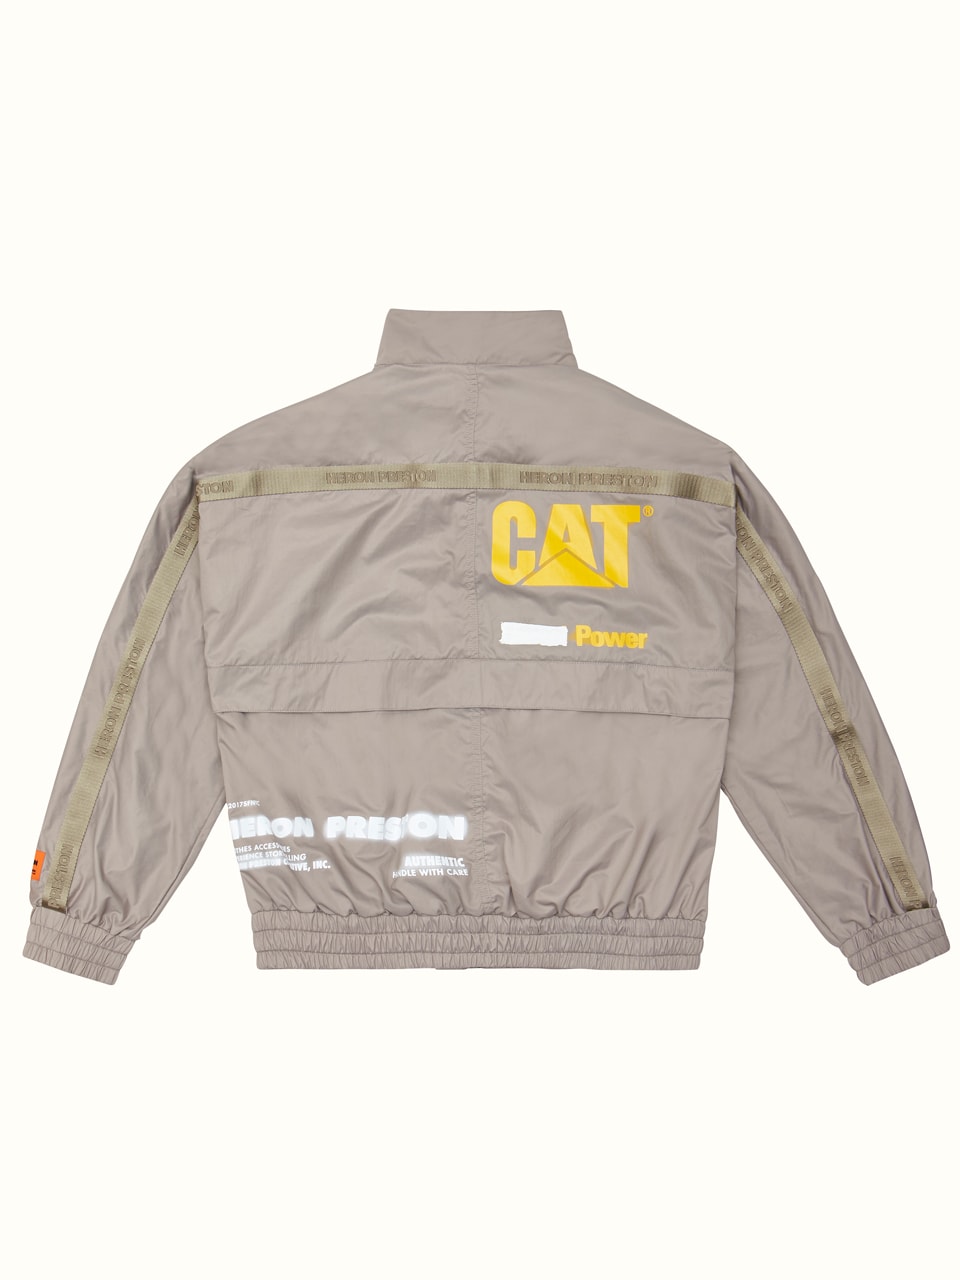 CAT x Heron Preston Spring/Summer 2021 Collaboration collection ss21 caterpillar menswear clothing jacket tee shirt pants hat brand